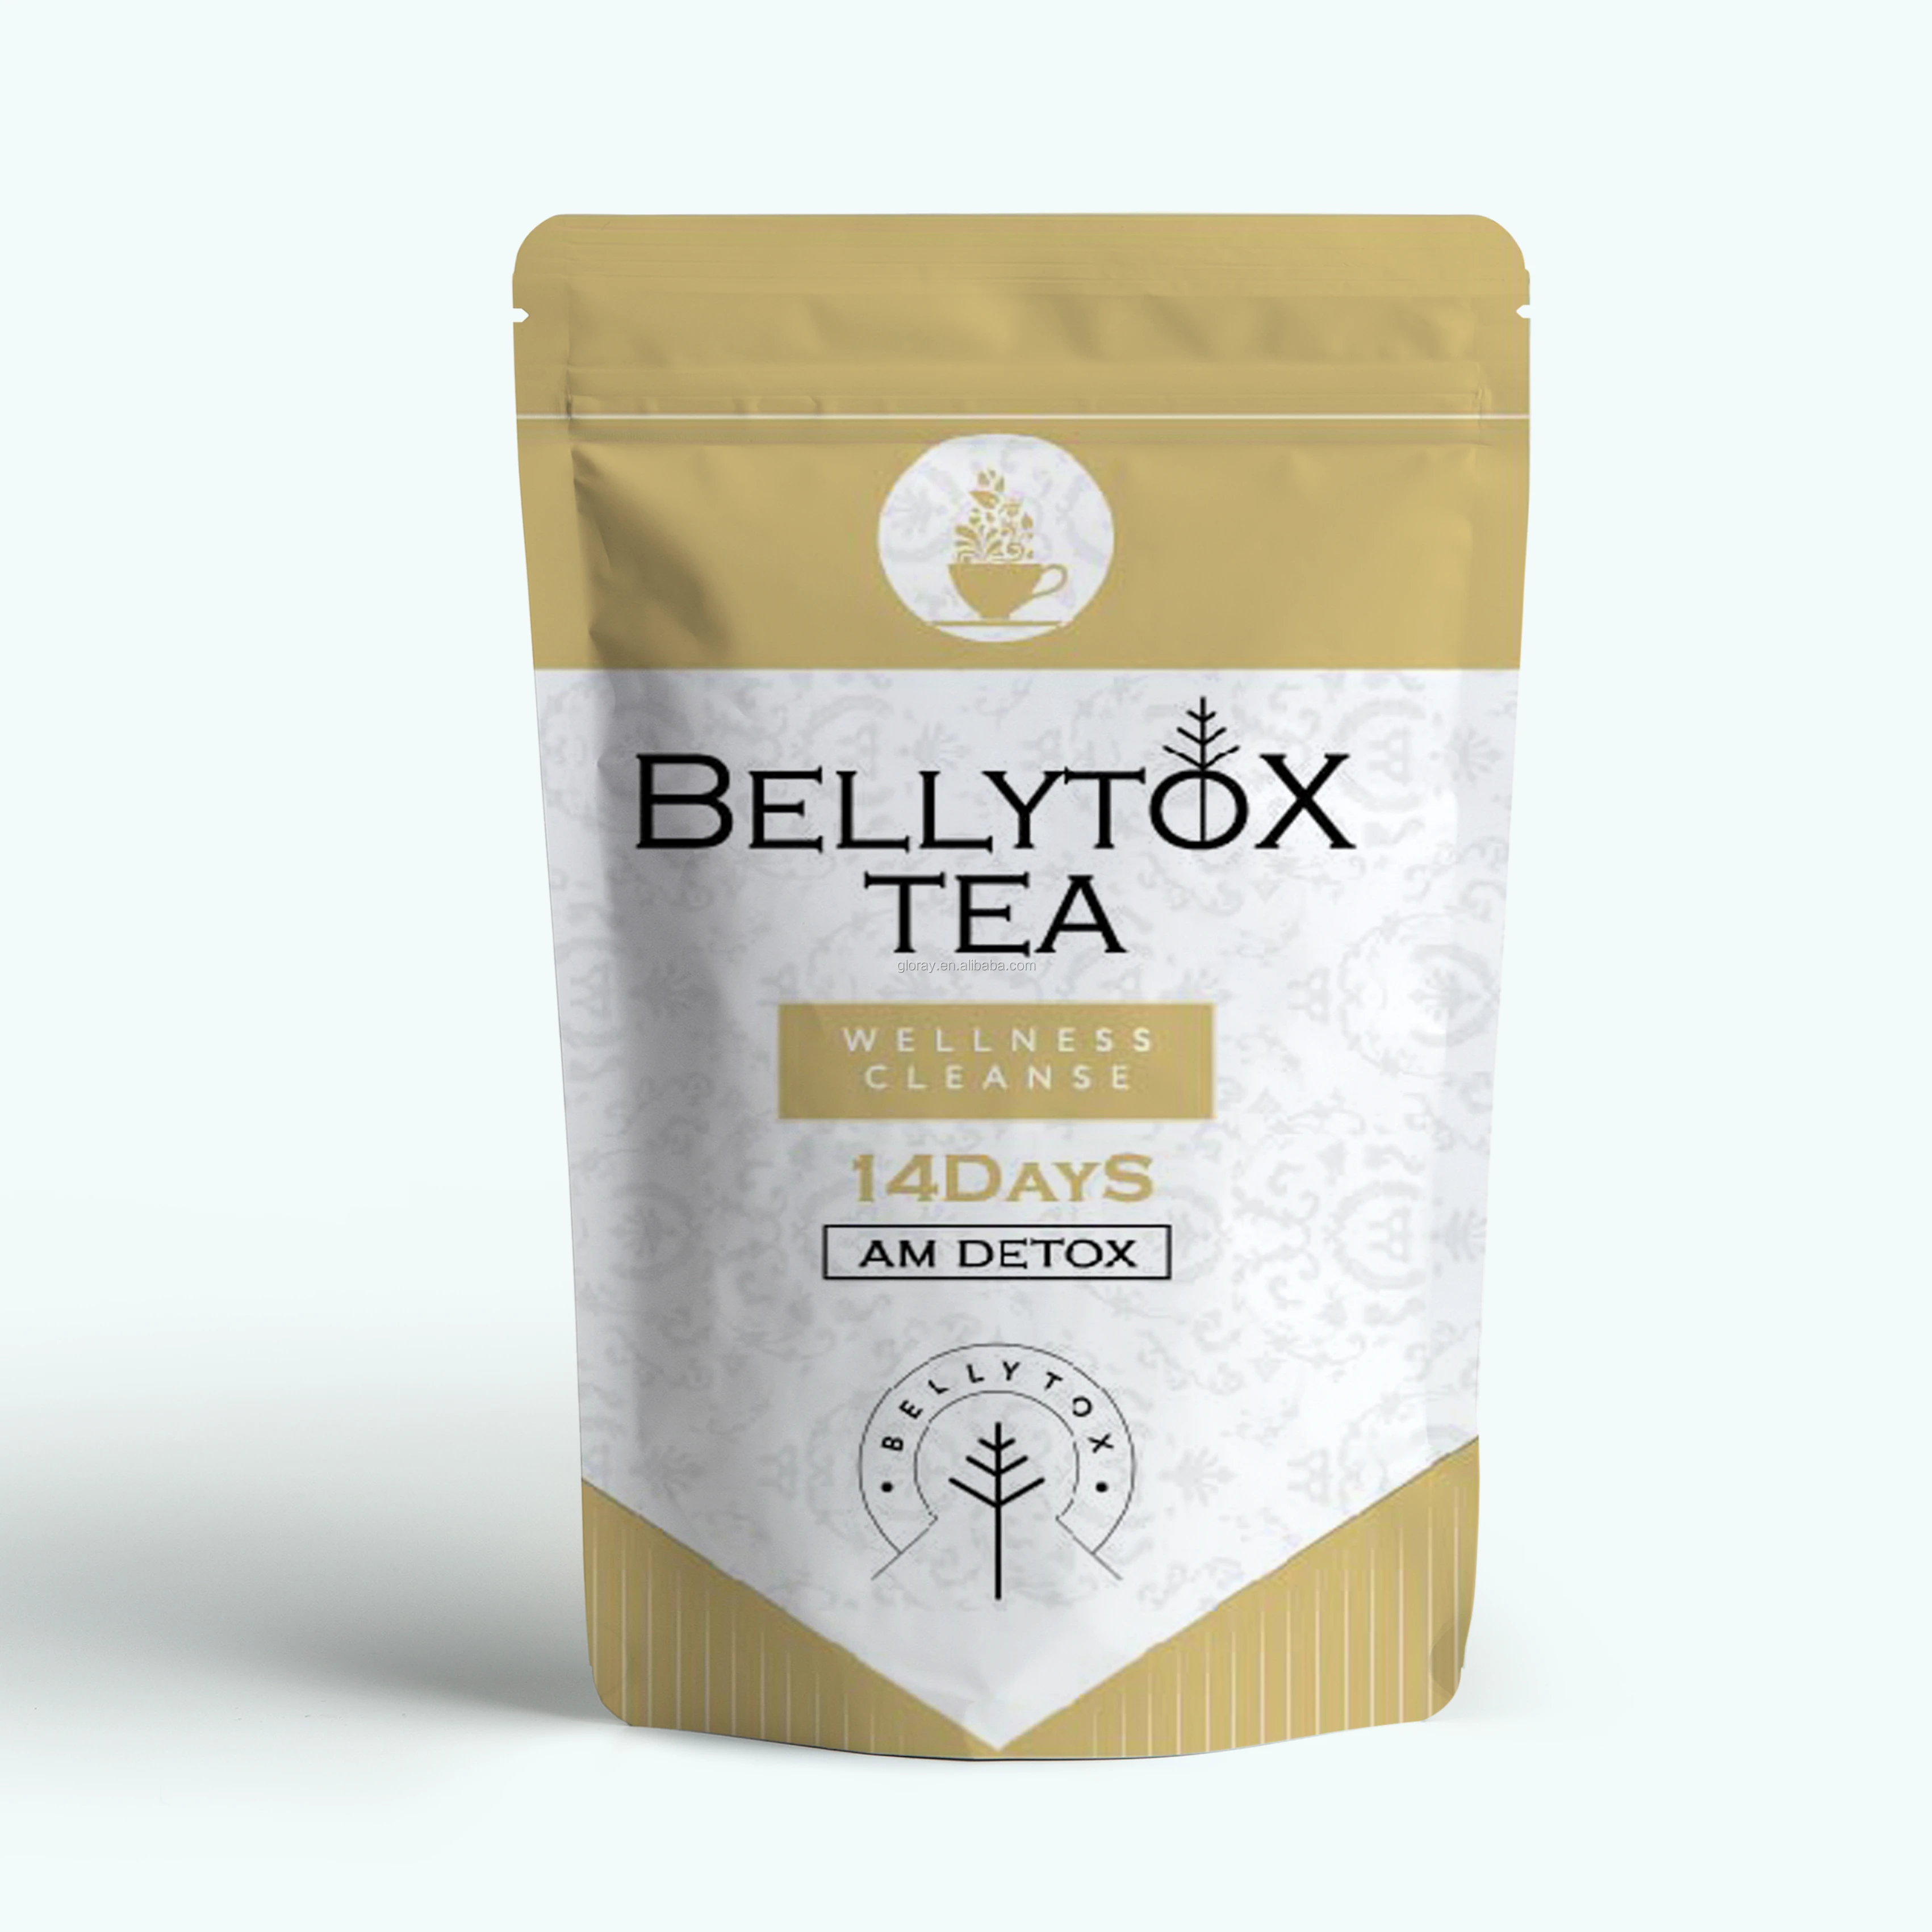 Private Label 14 days Fast Weight Loss Body Shaped Hot Selling Skinny Tetox Flat Tummy Tea wholesale detox slim tea